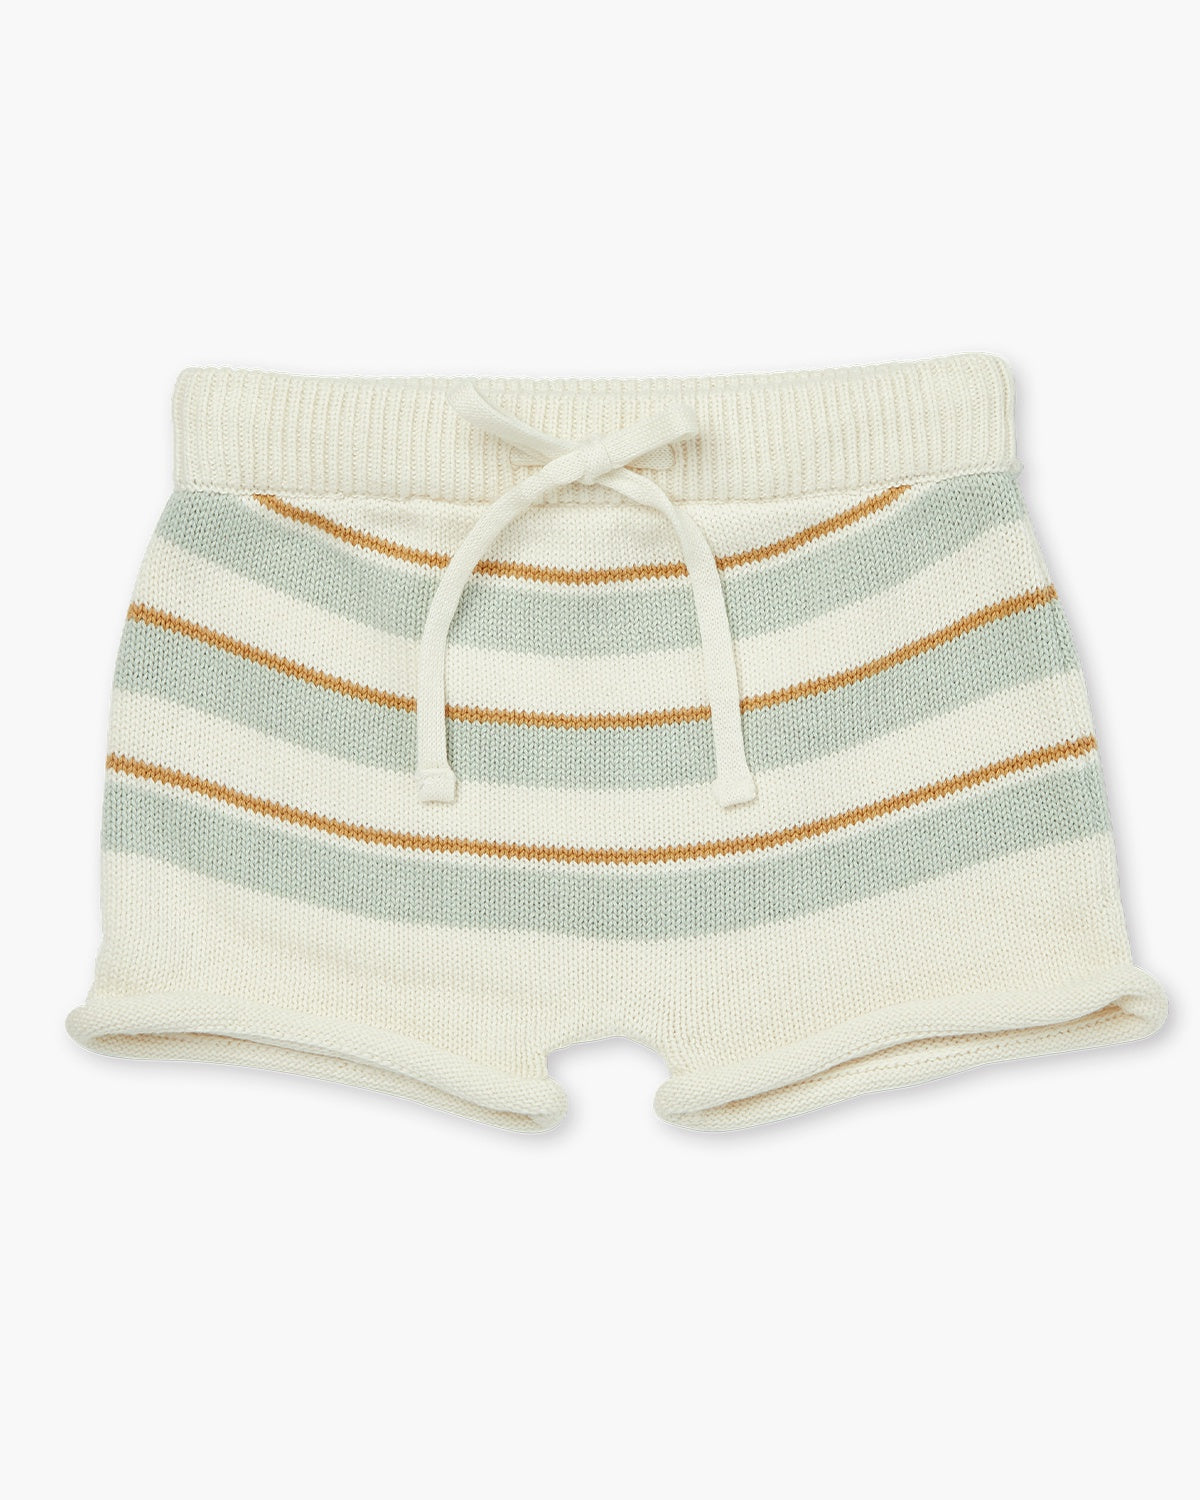 Walnut Baby - Jack Knit Shorts - Sage Stripe